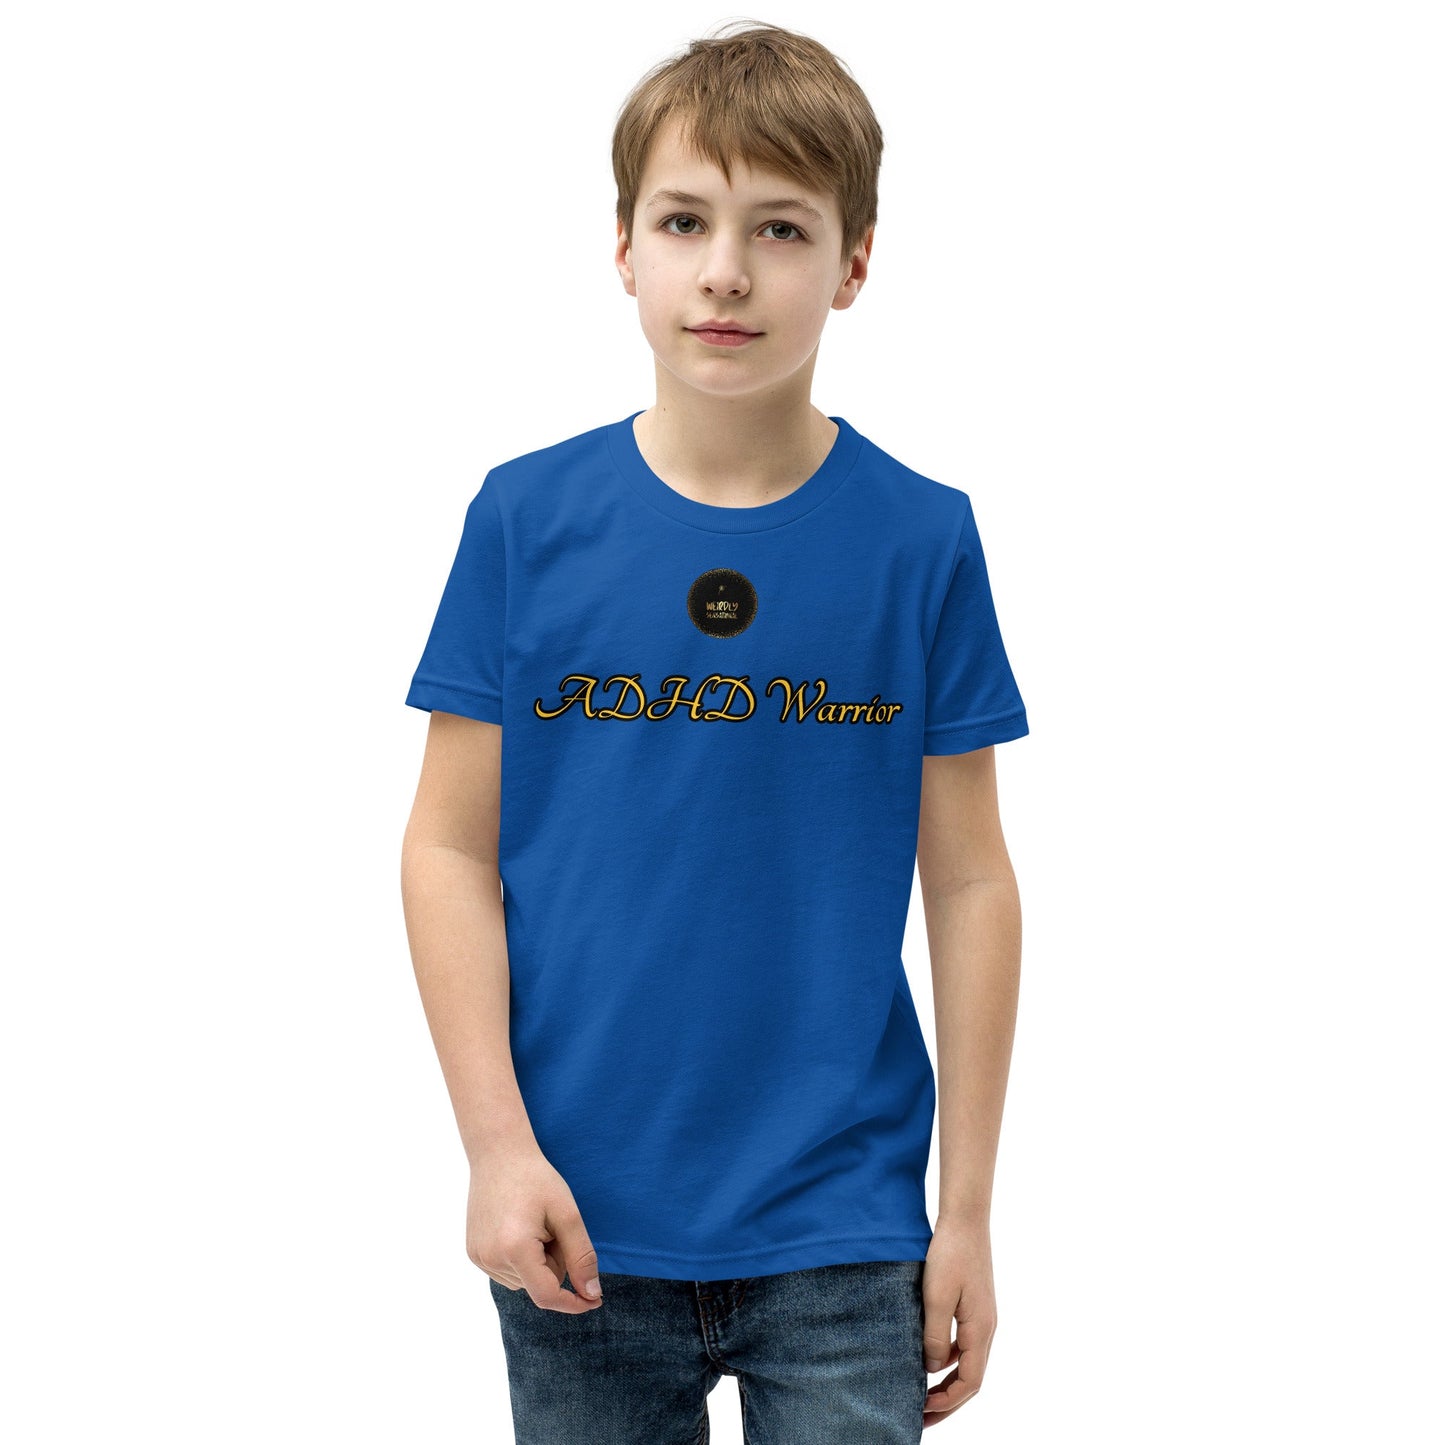 ADHD Warrior Youth Short Sleeve T-Shirt - Weirdly Sensational